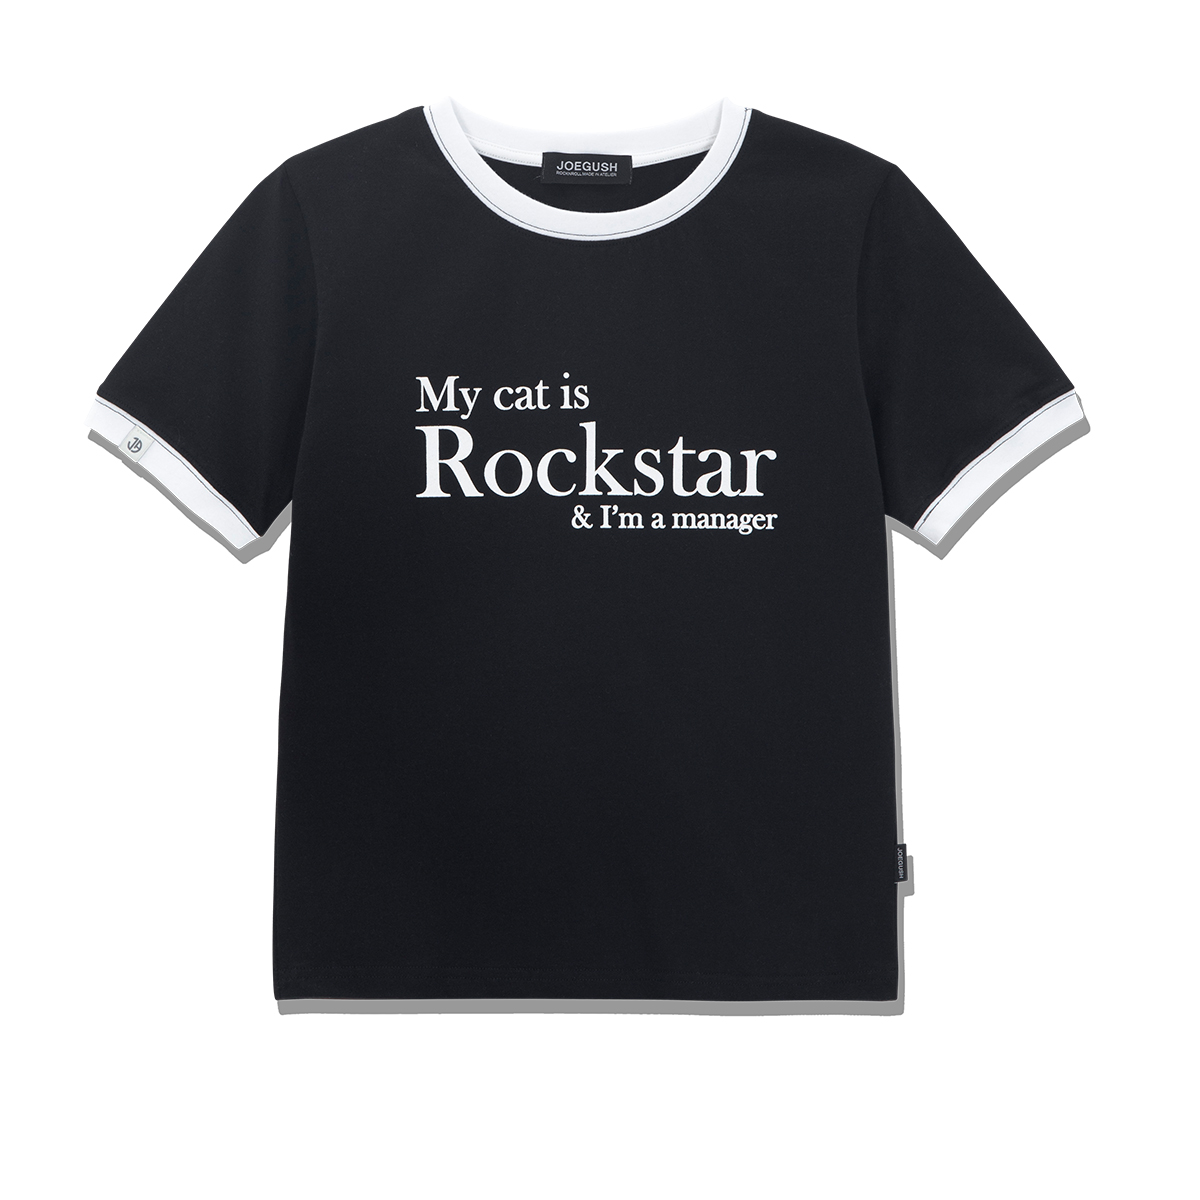 My cat is Rockstar Ringer T-shirt (CROP VER.) (Black)